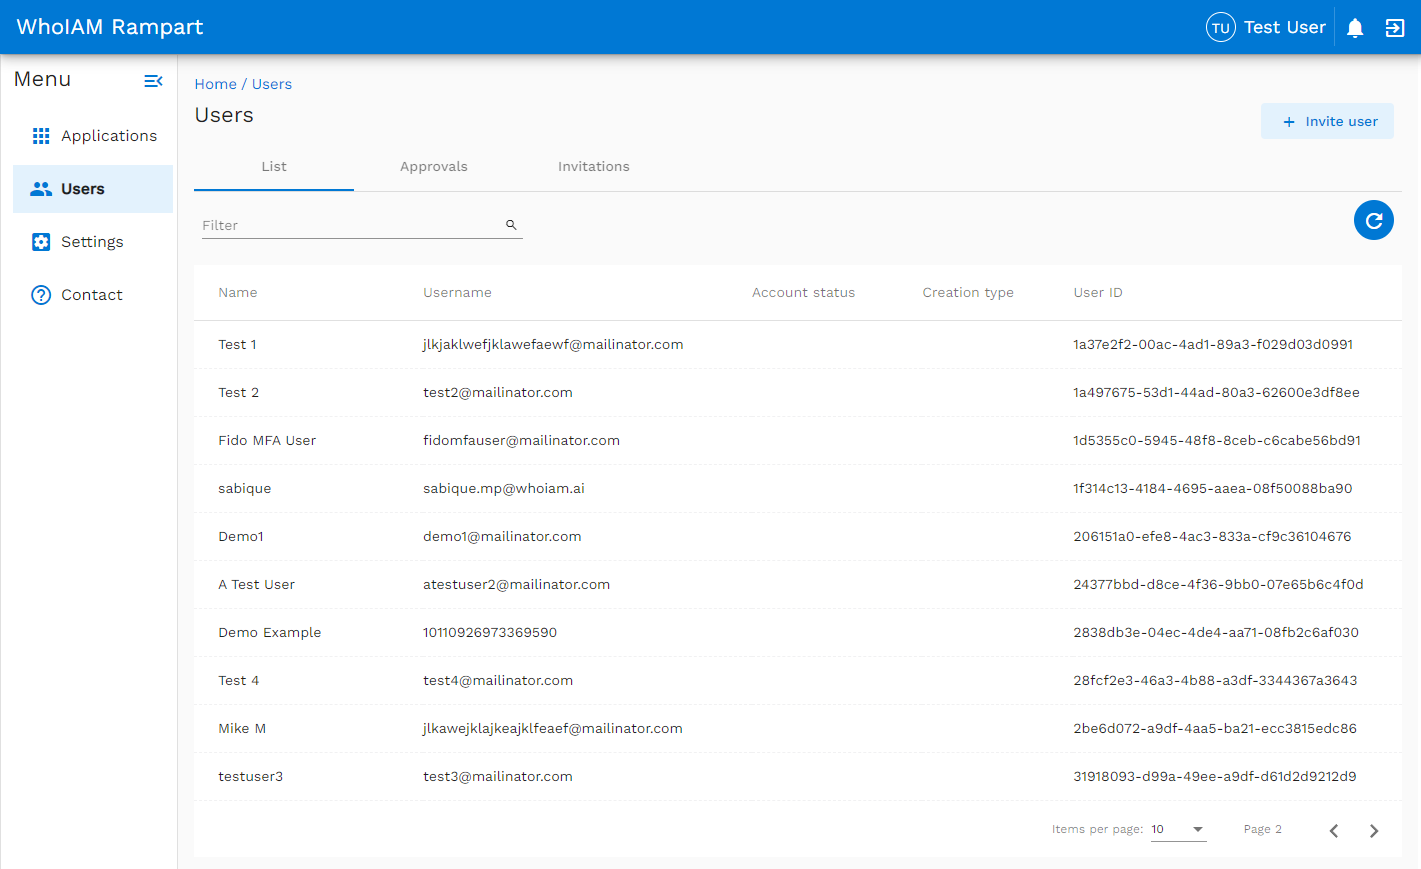 Azure AD B2C 租户中 WhoIAM Rampart 用户列表的屏幕截图。